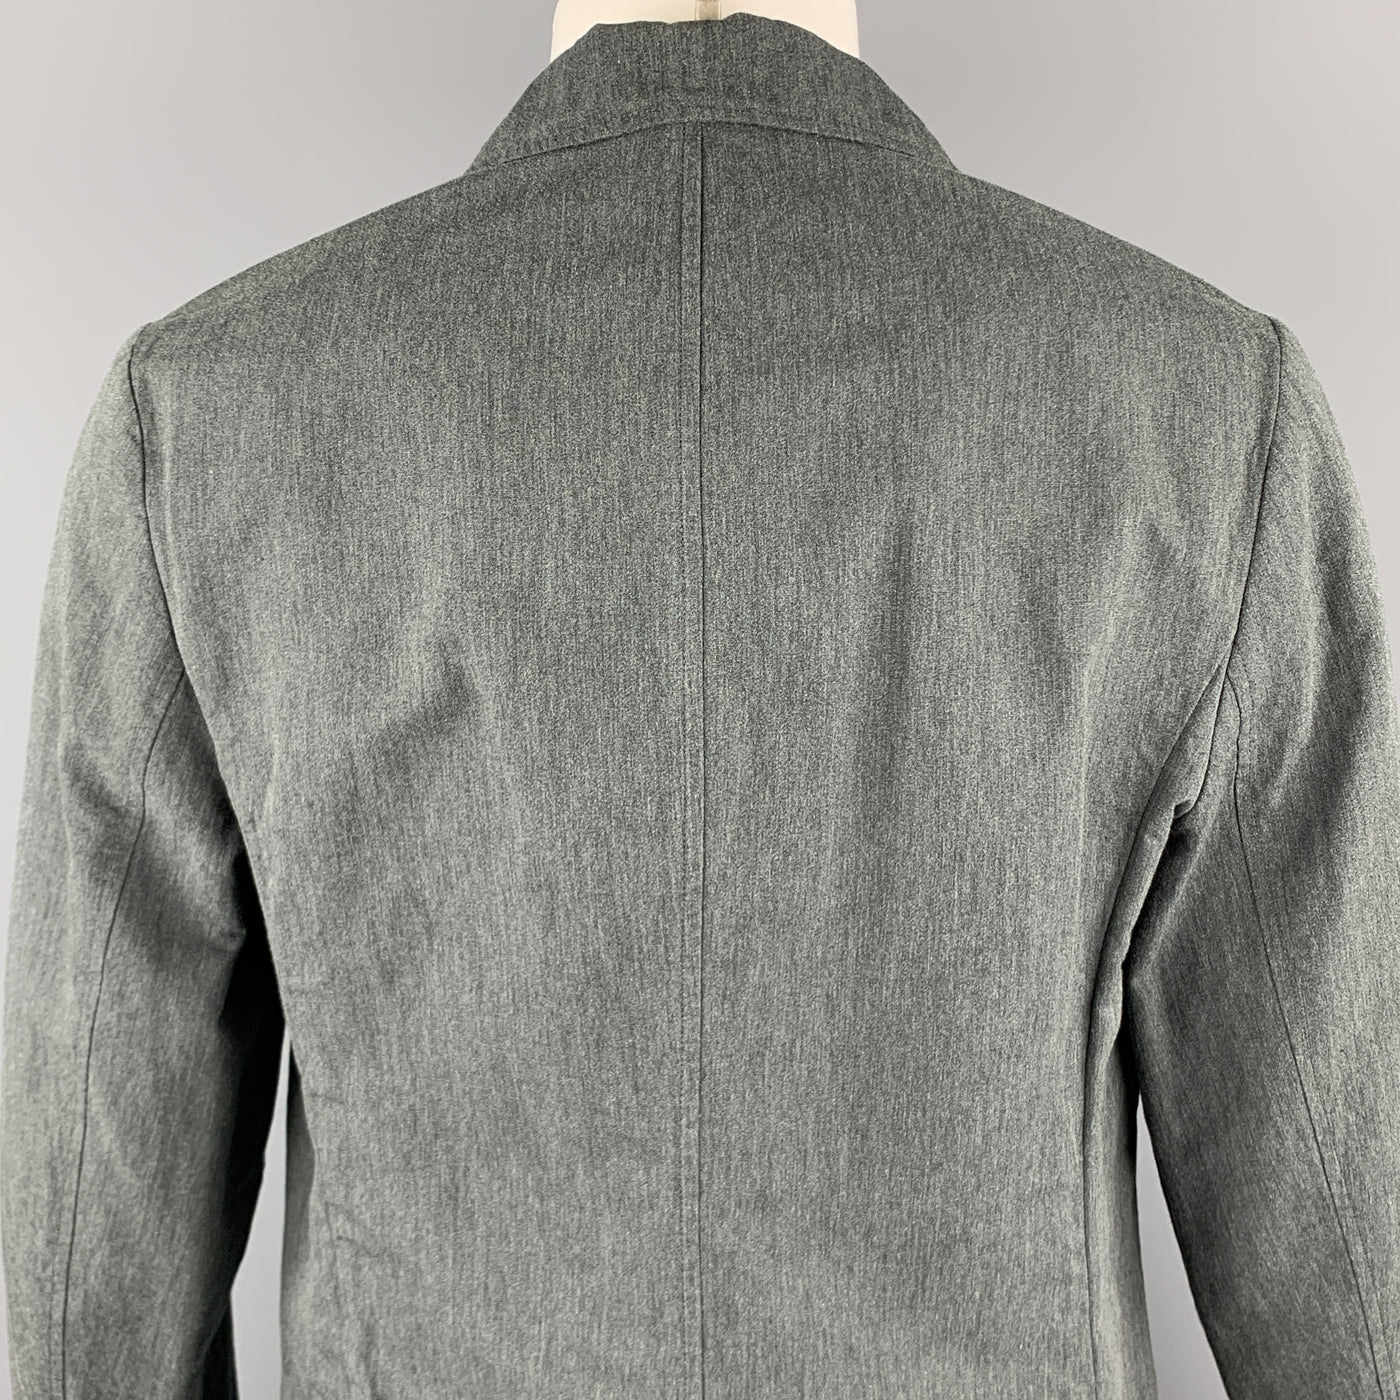 KENNETH COLE M Dark Gray Cotton / Linen Notch Lapel  Sport Coat